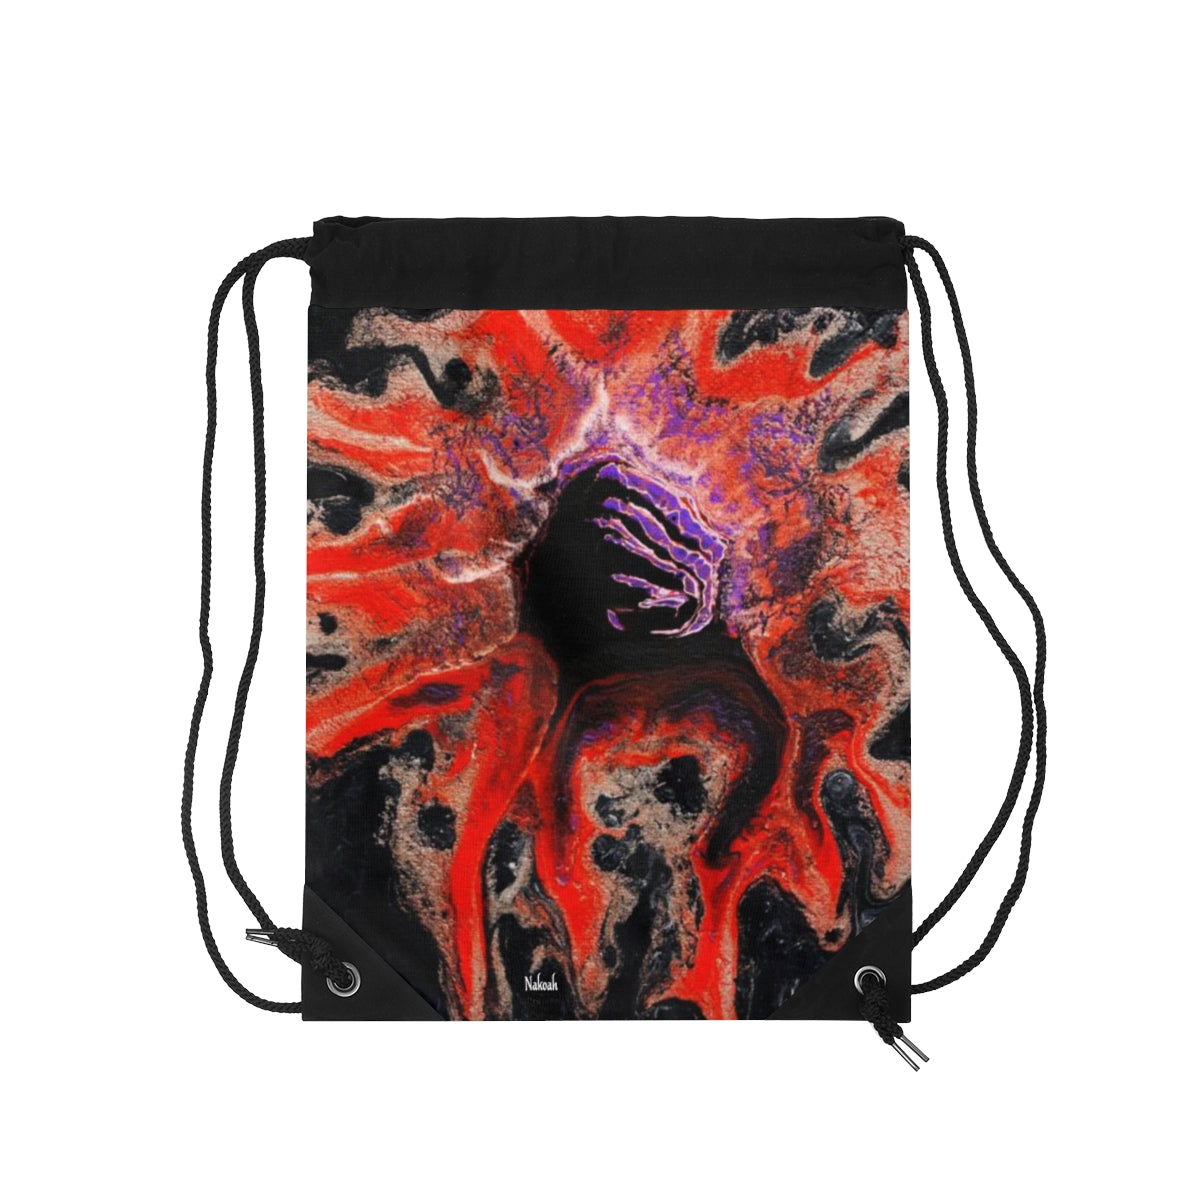 Black Hole Drawstring Bag